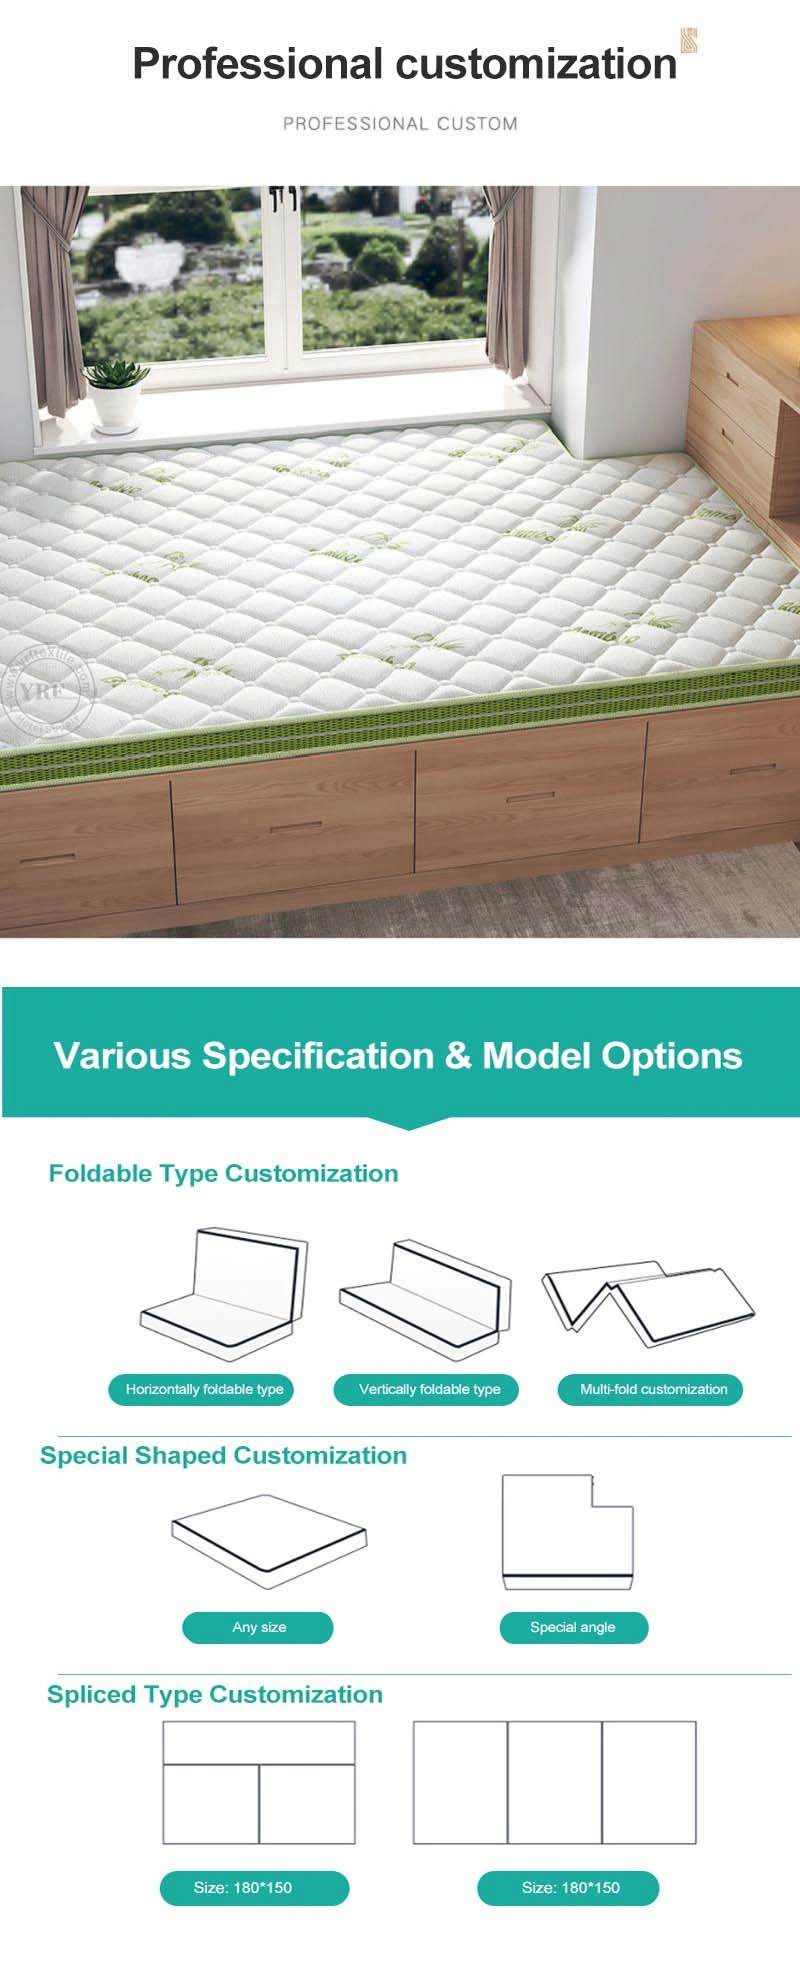 Home Latex Sleeping Tatami Folding Detachable Washable 18cm Double Bed